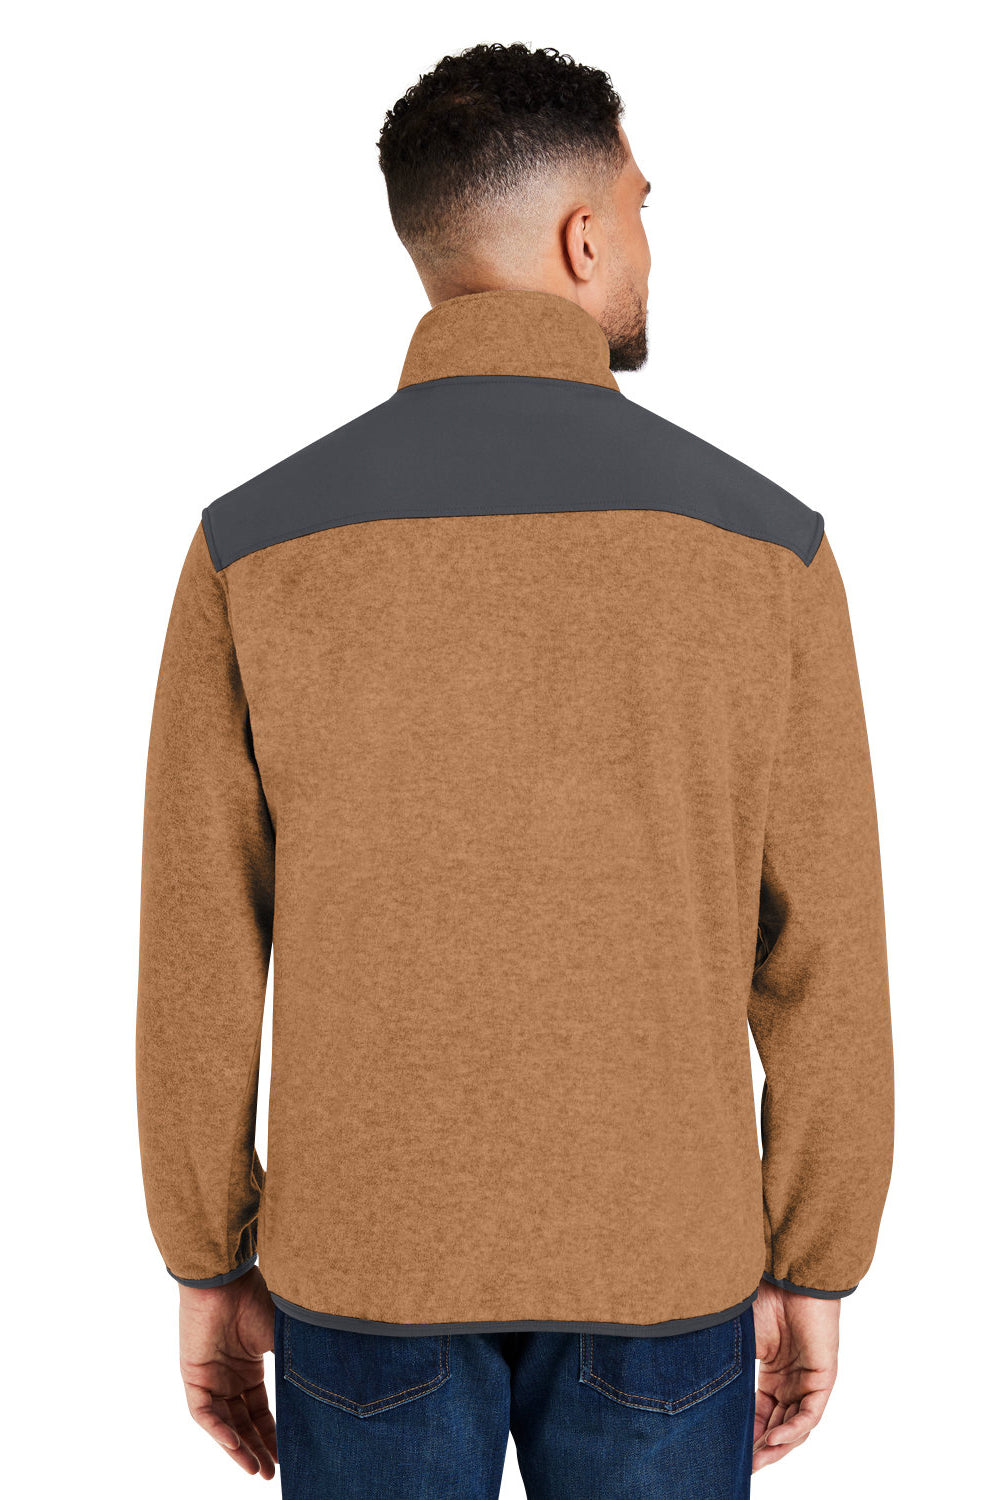 Dri Duck 7353 Mens Ranger Melange Fleece Sweatshirt Saddle Brown Model Back